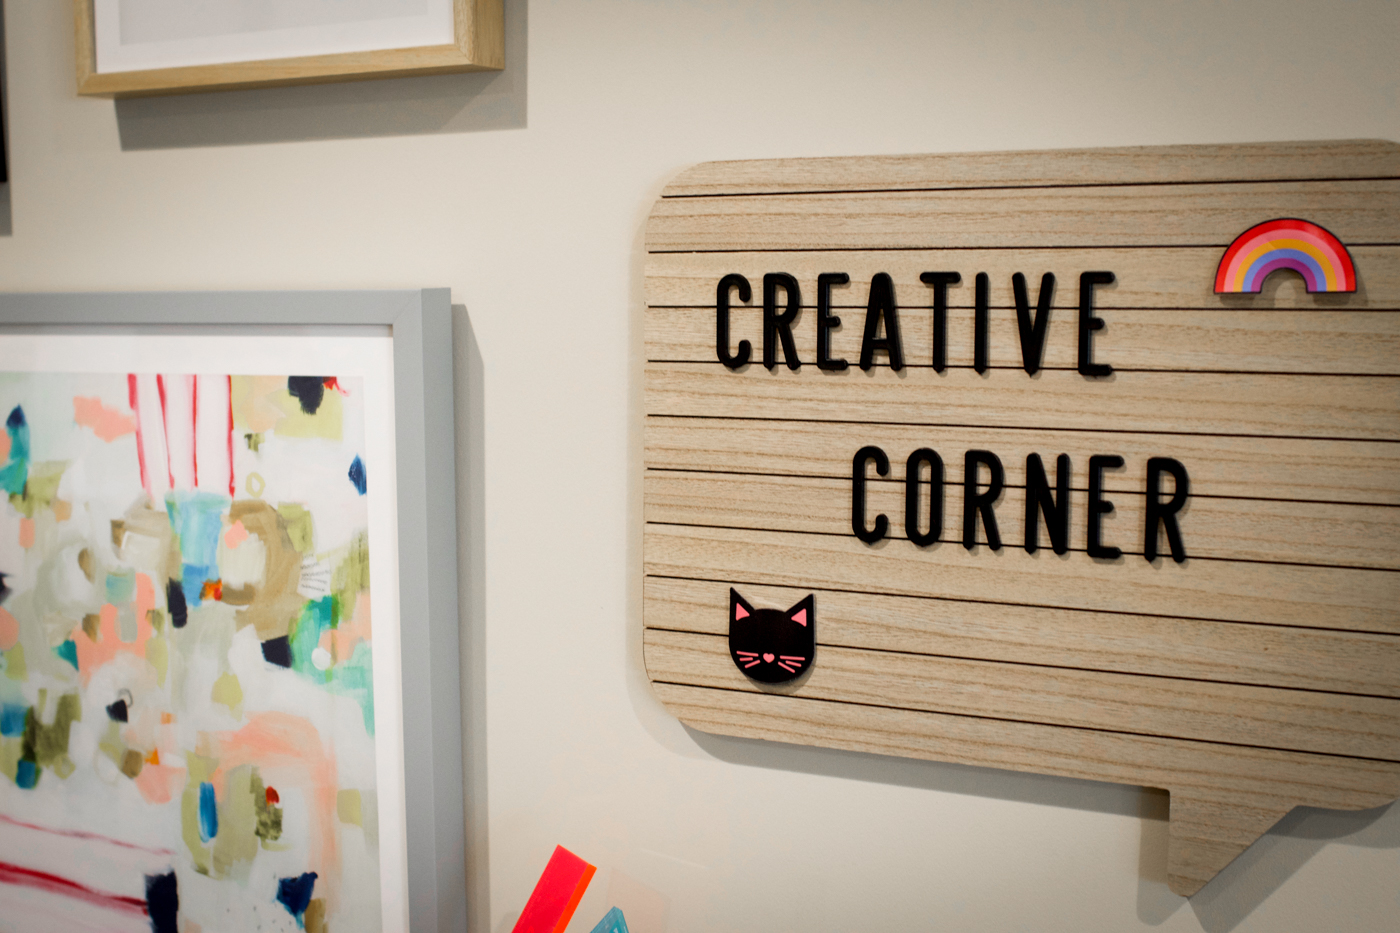 Our Creative Corner/Homeschool Space